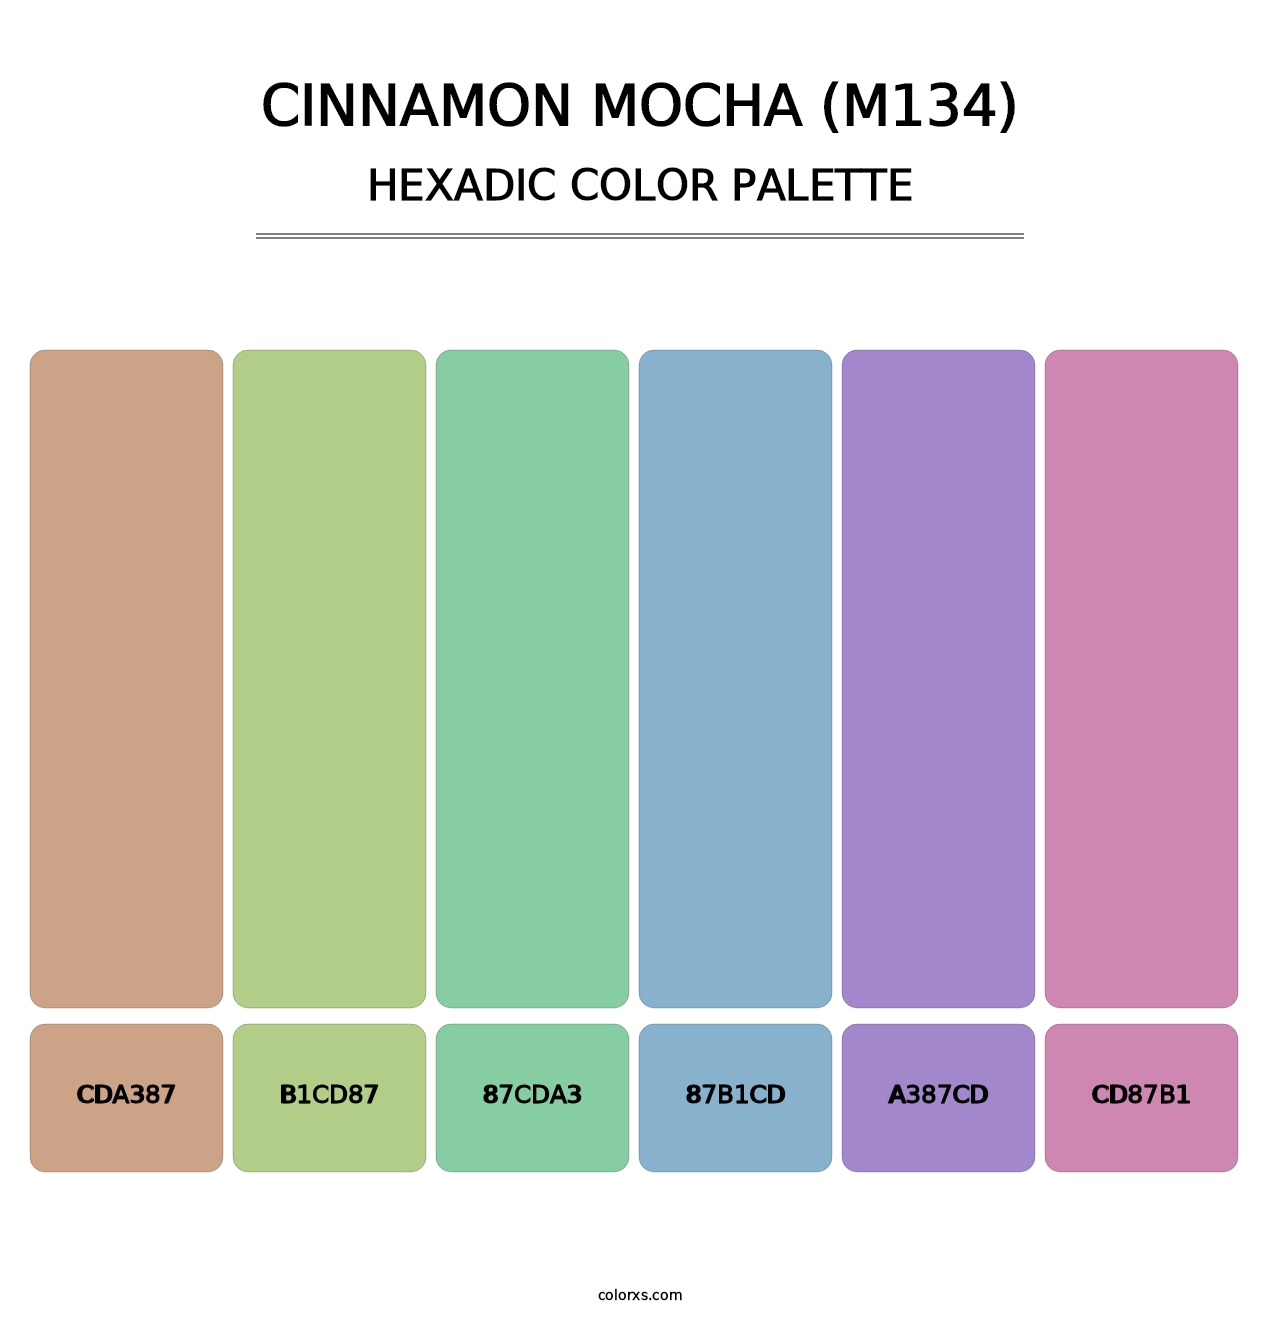 Cinnamon Mocha (M134) - Hexadic Color Palette